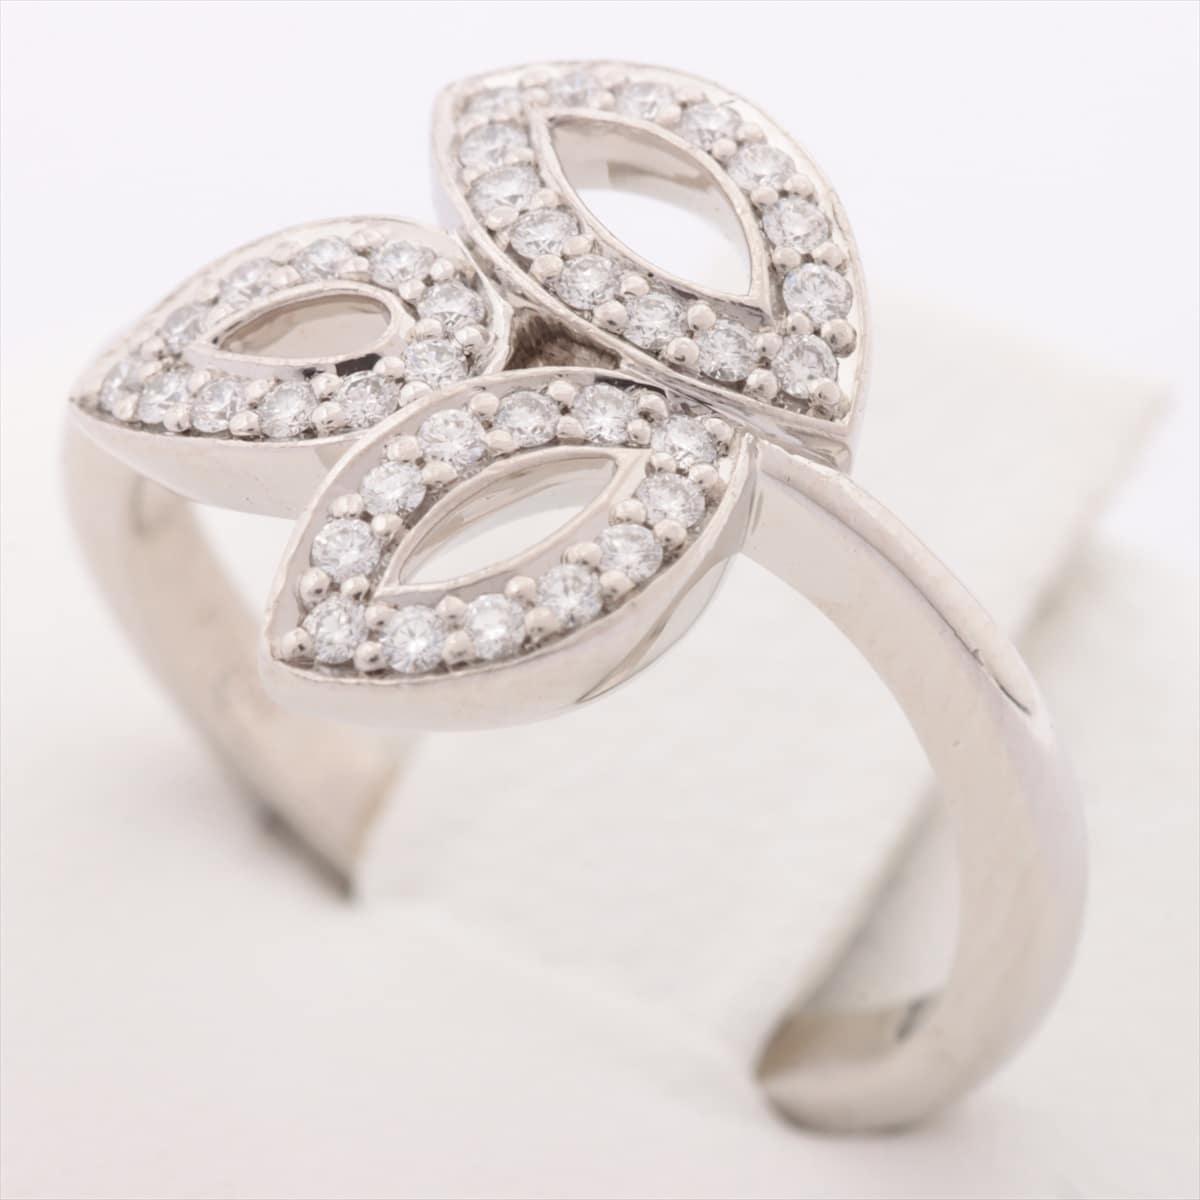 Harry Winston Lily Cluster Mini diamond rings Pt950 6.0g